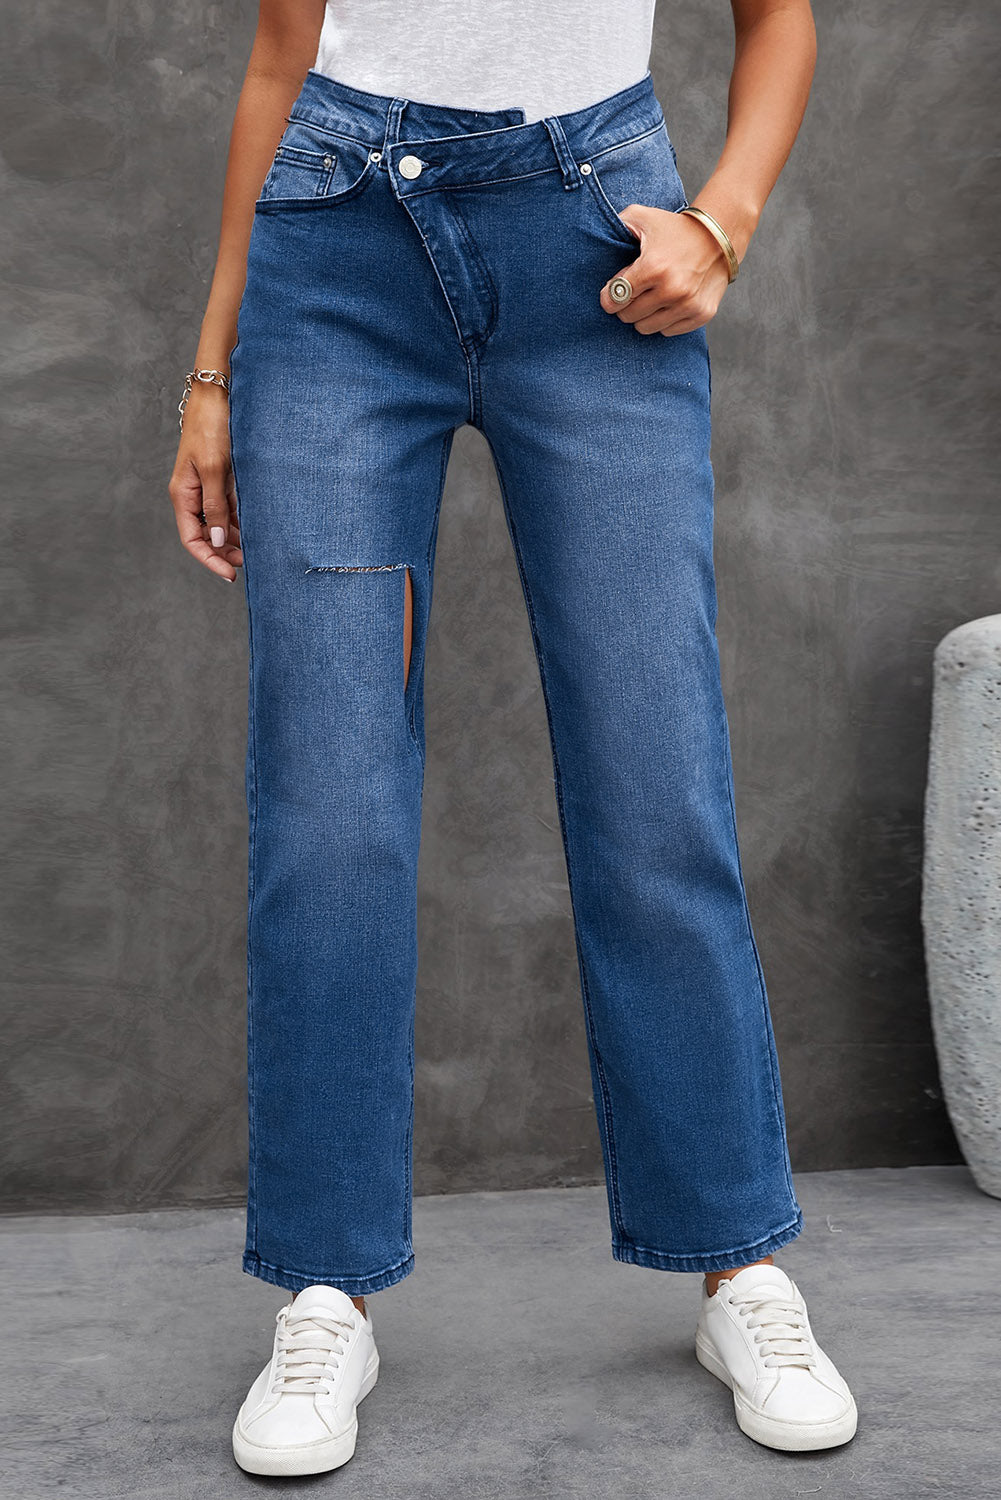 Asymmetrical High Waist Distressed Jeans